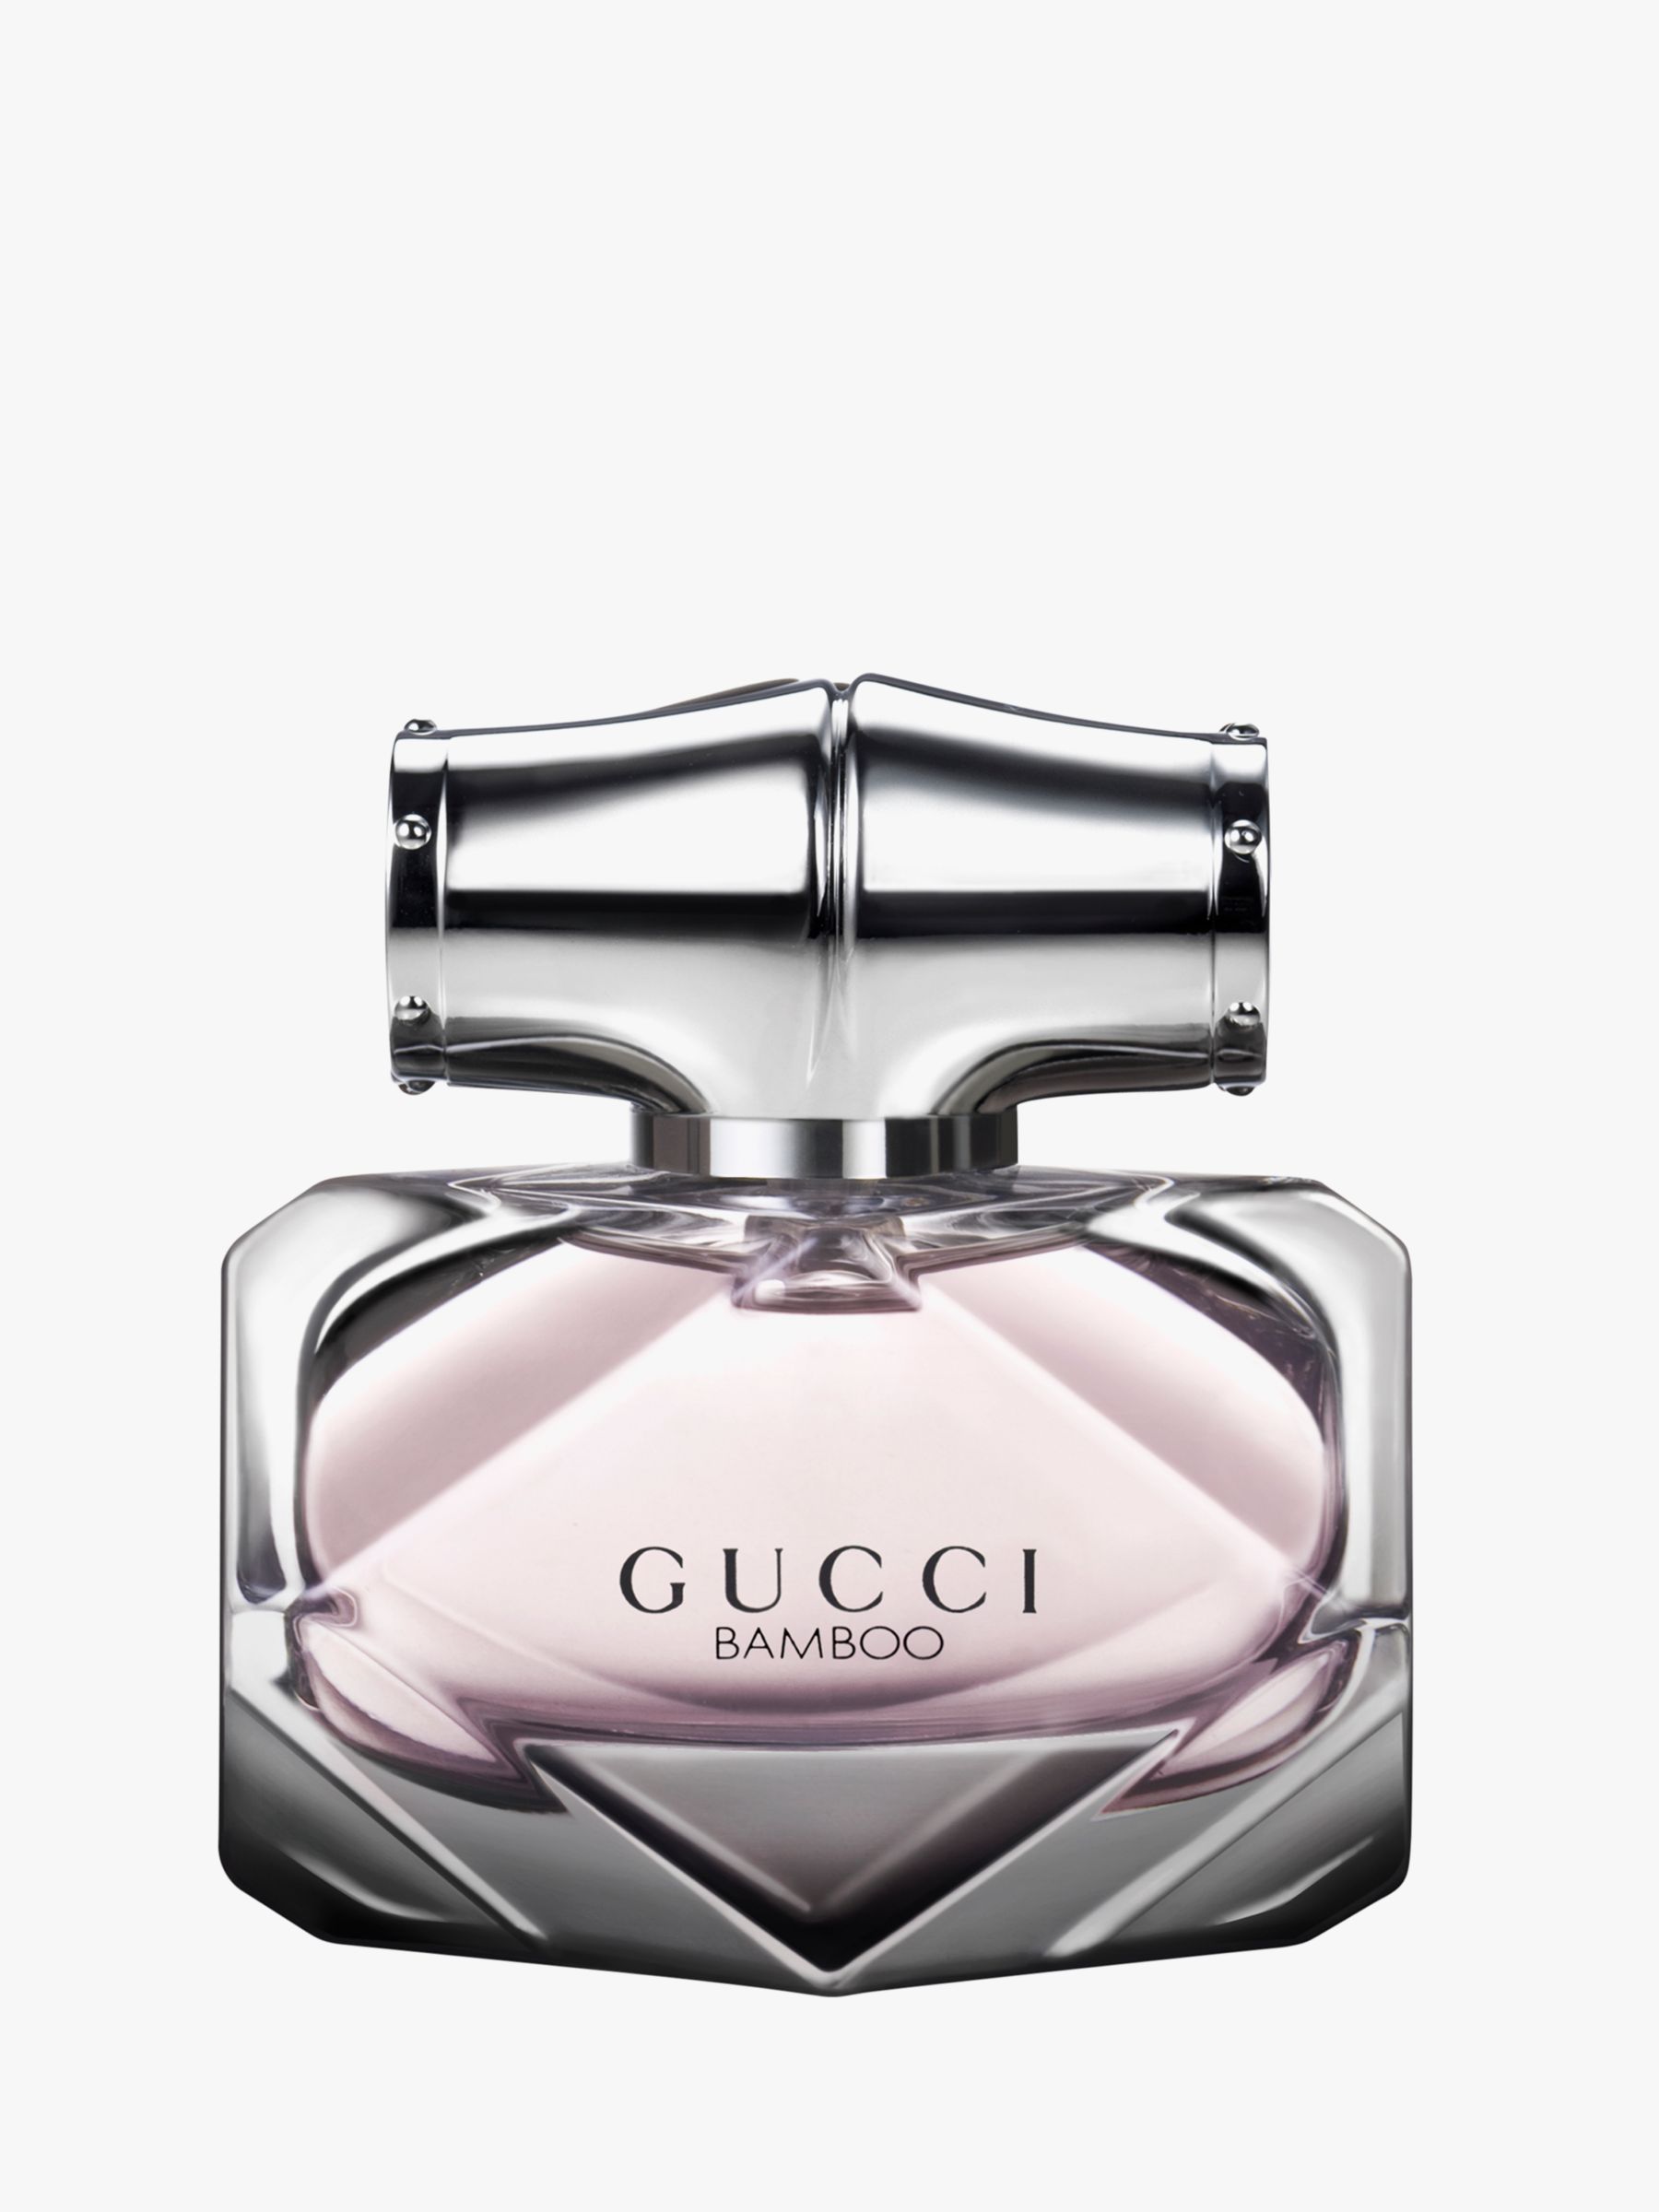 Gucci Bamboo Eau de Parfum, 30ml